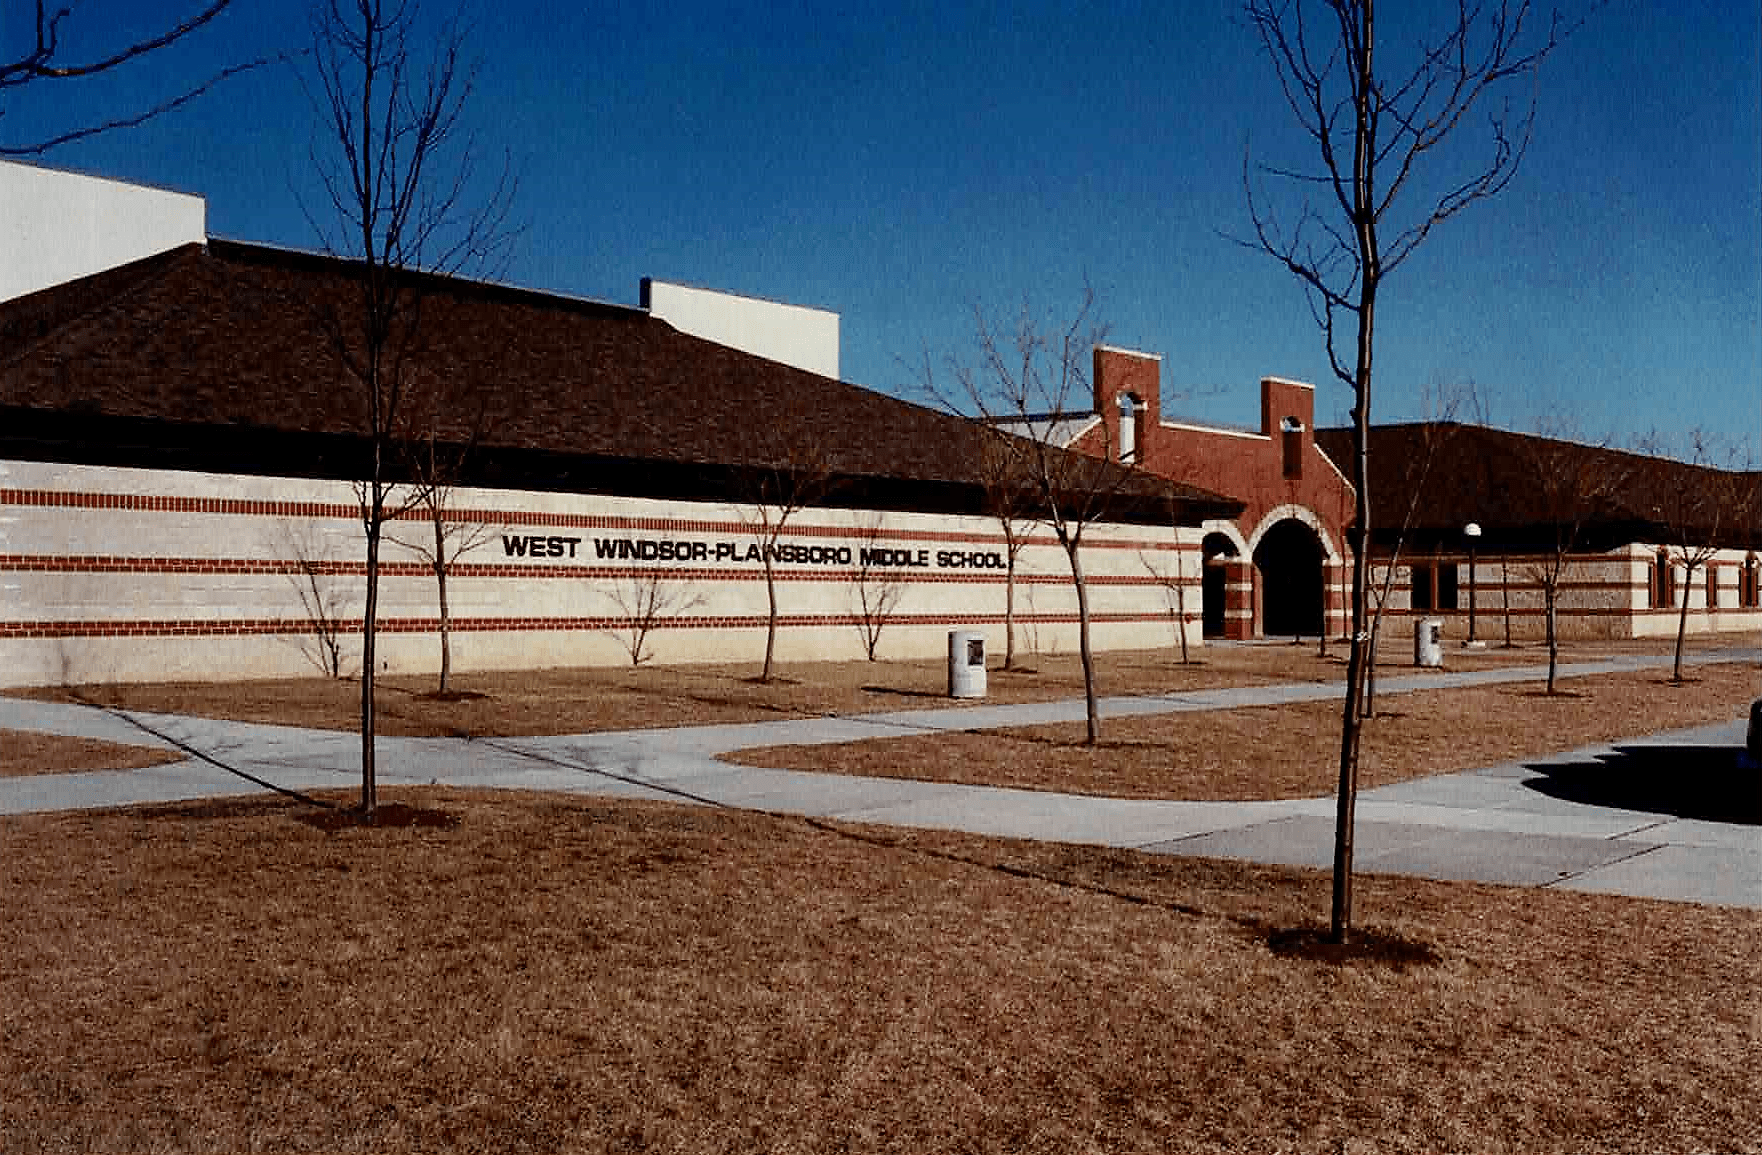 West Windsor-Plainsboro Middle School, January 1990